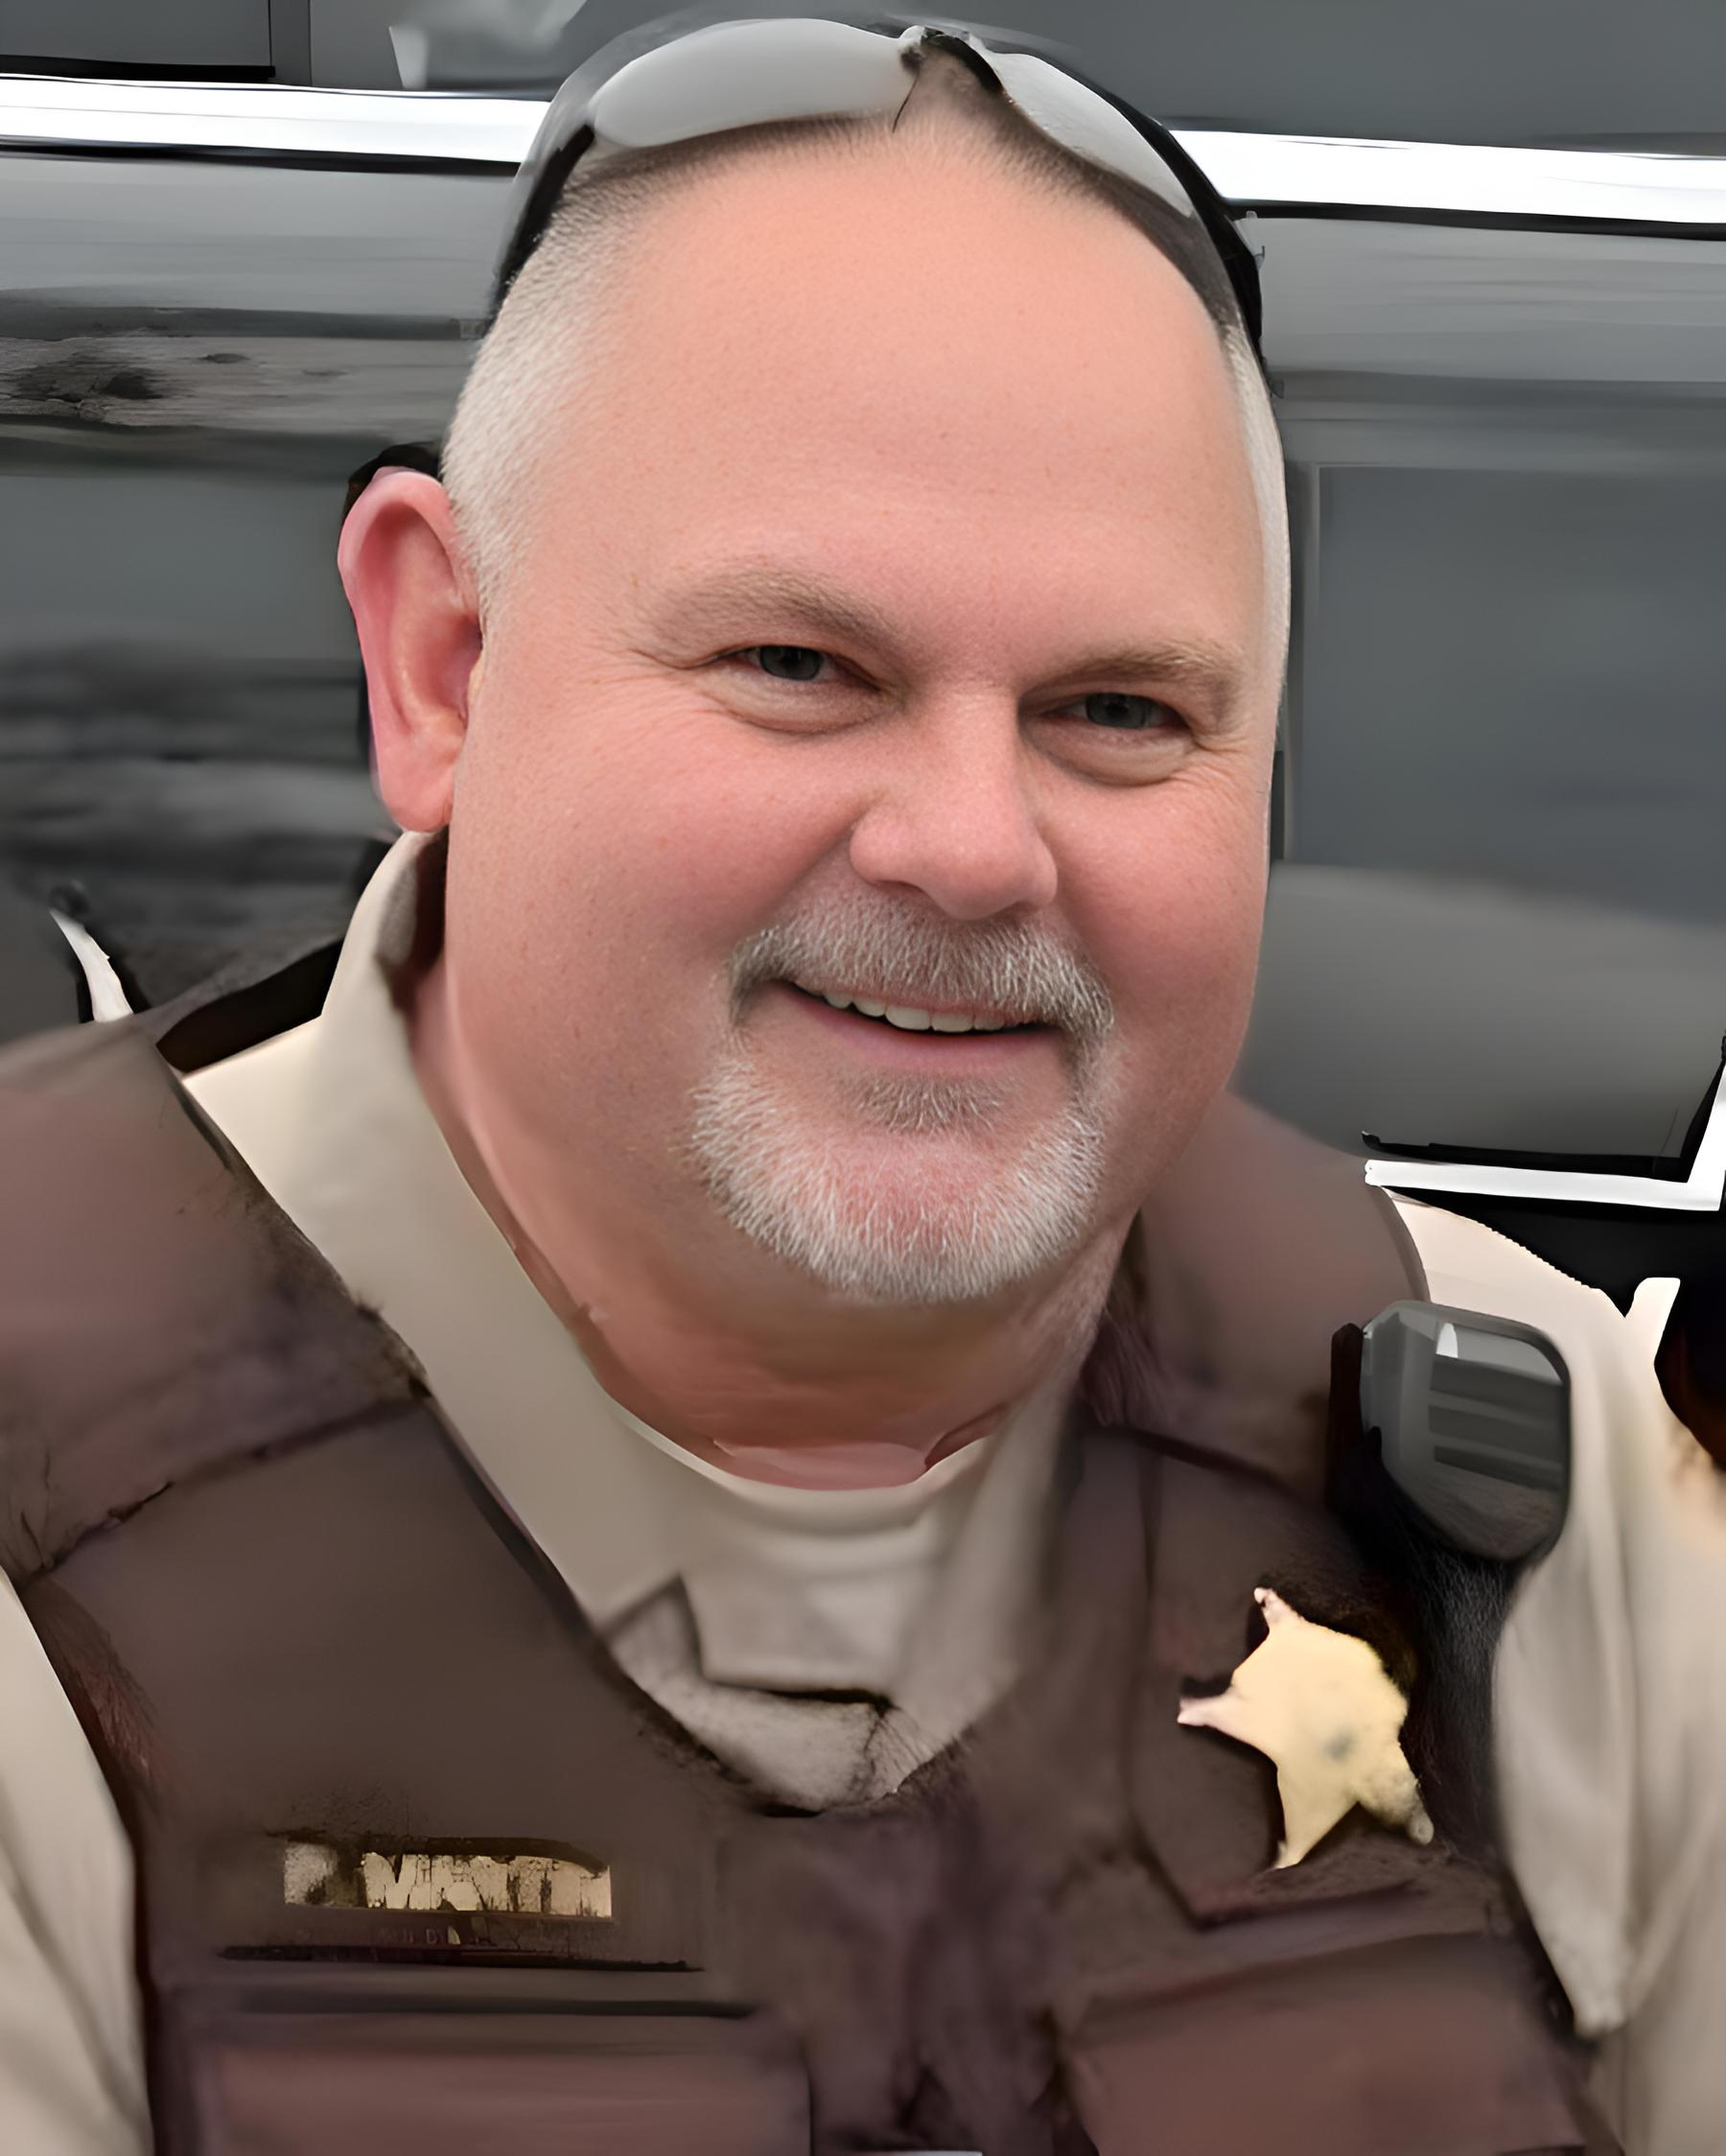 Deputy Sheriff Paul Martin